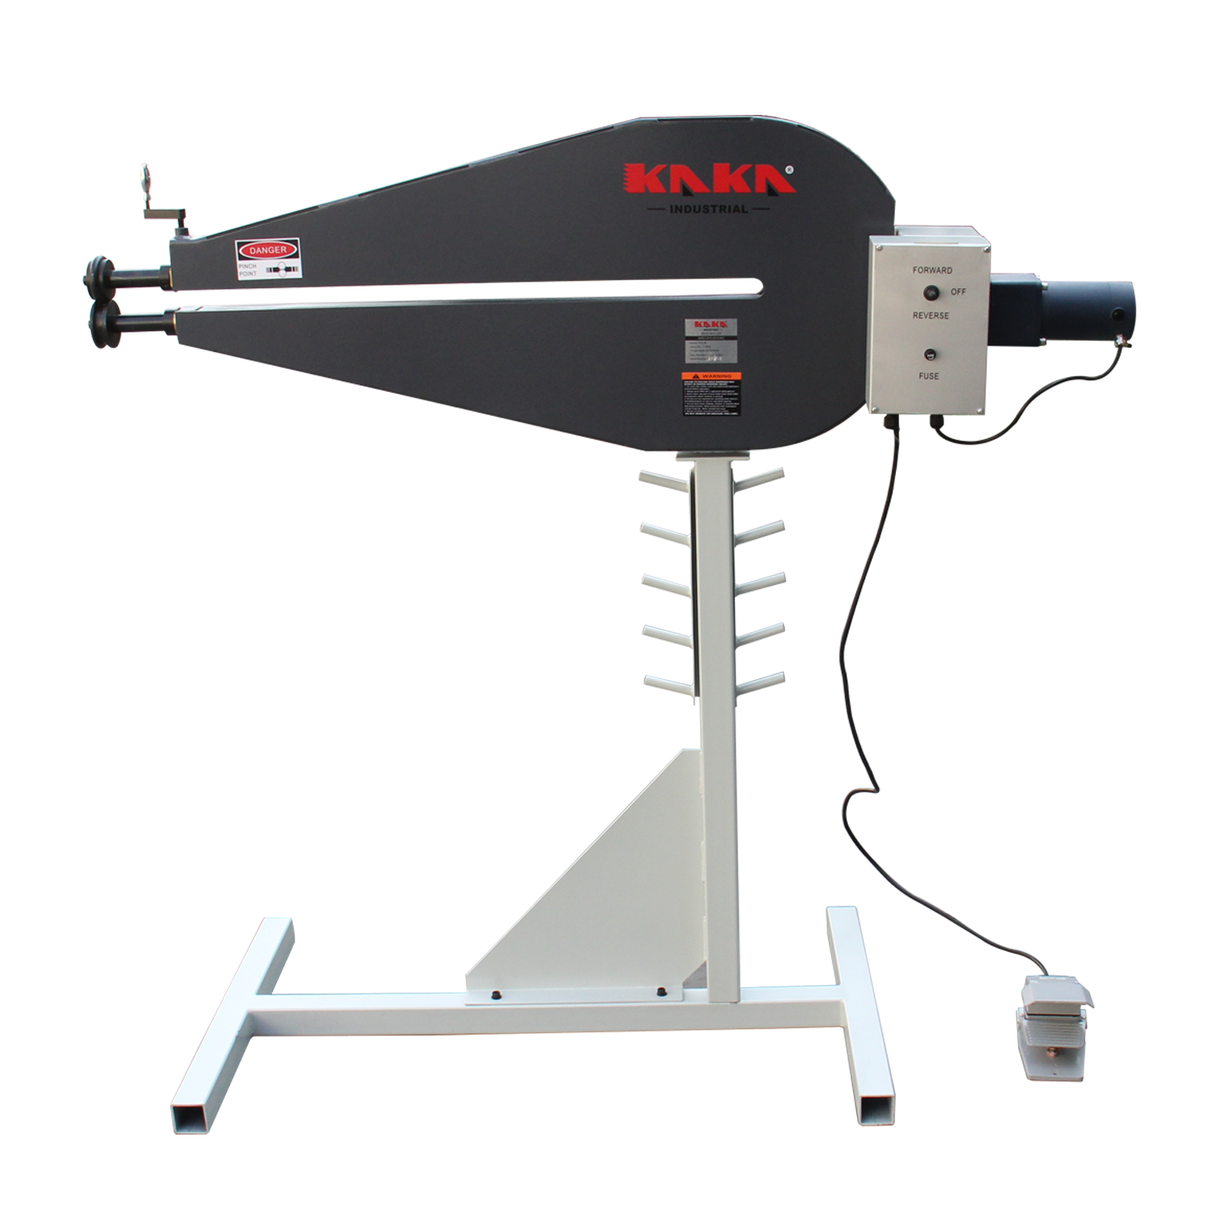 KAKA Industrial RM-36 Power Bead Roller Machine